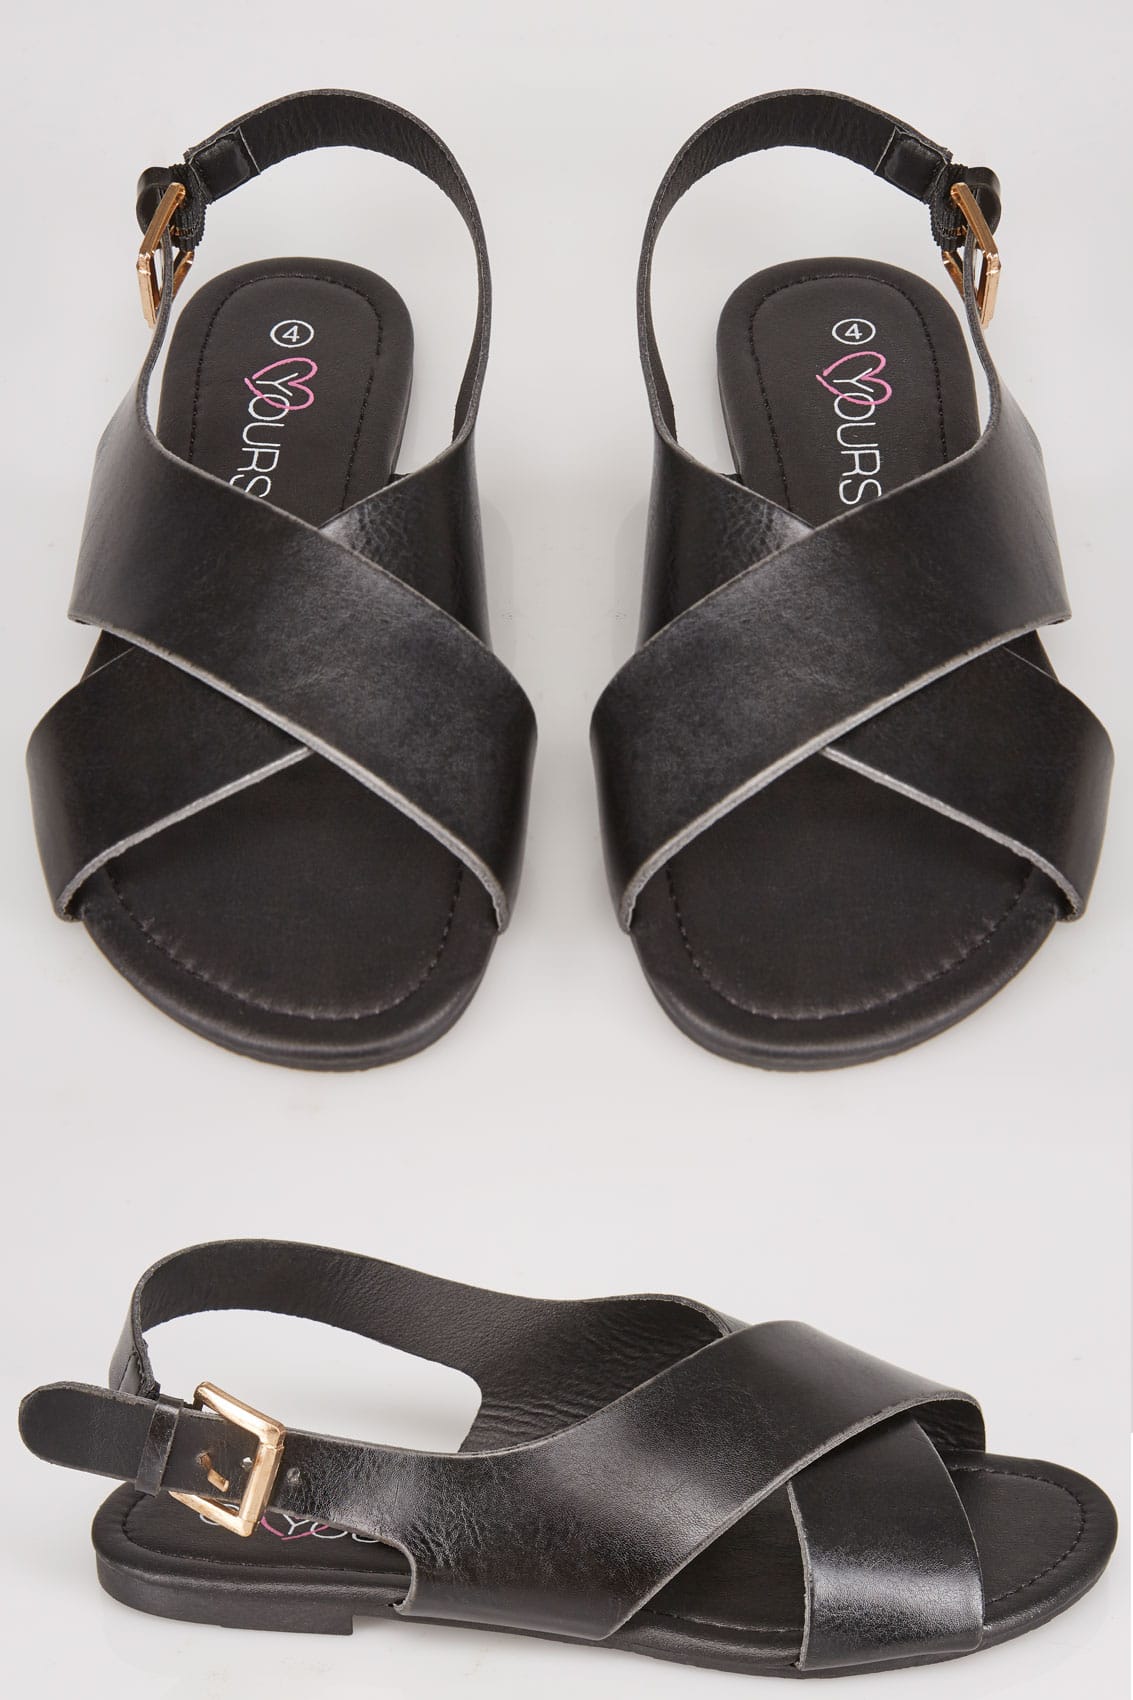 Black cross sandals